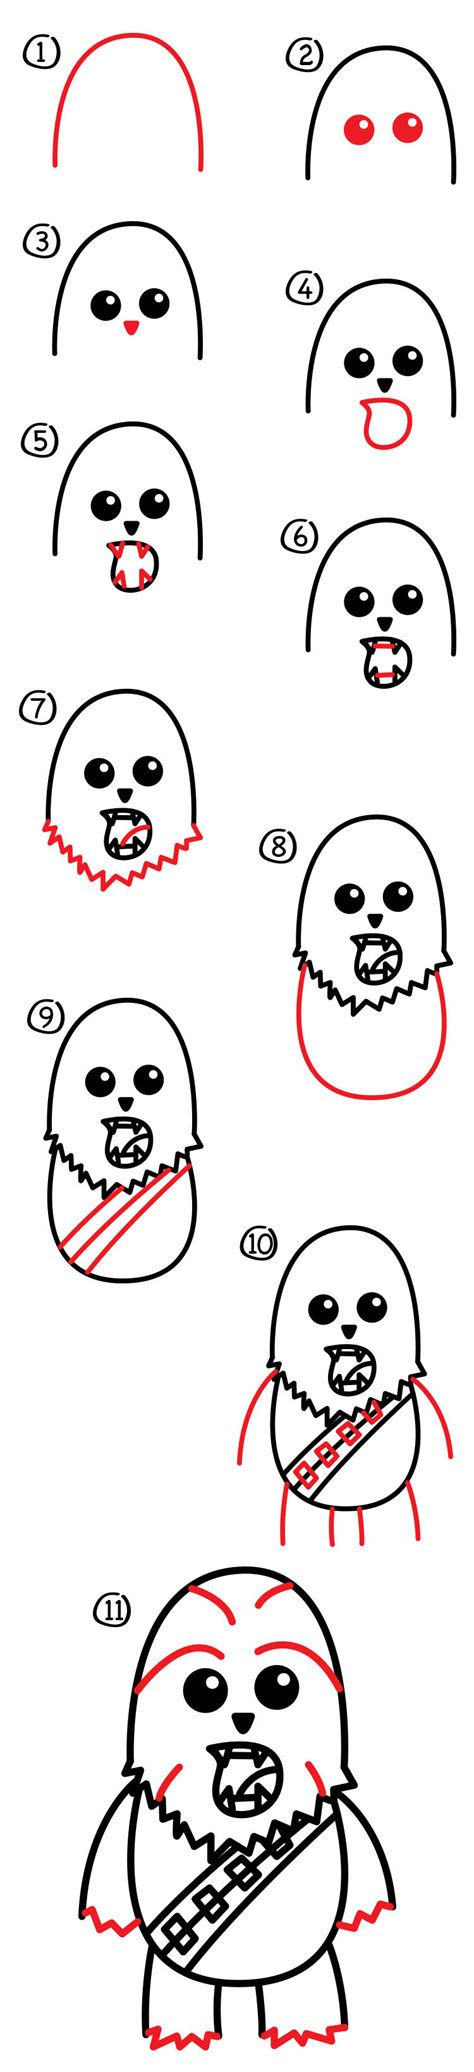 how to draw a cartoon chewbacca